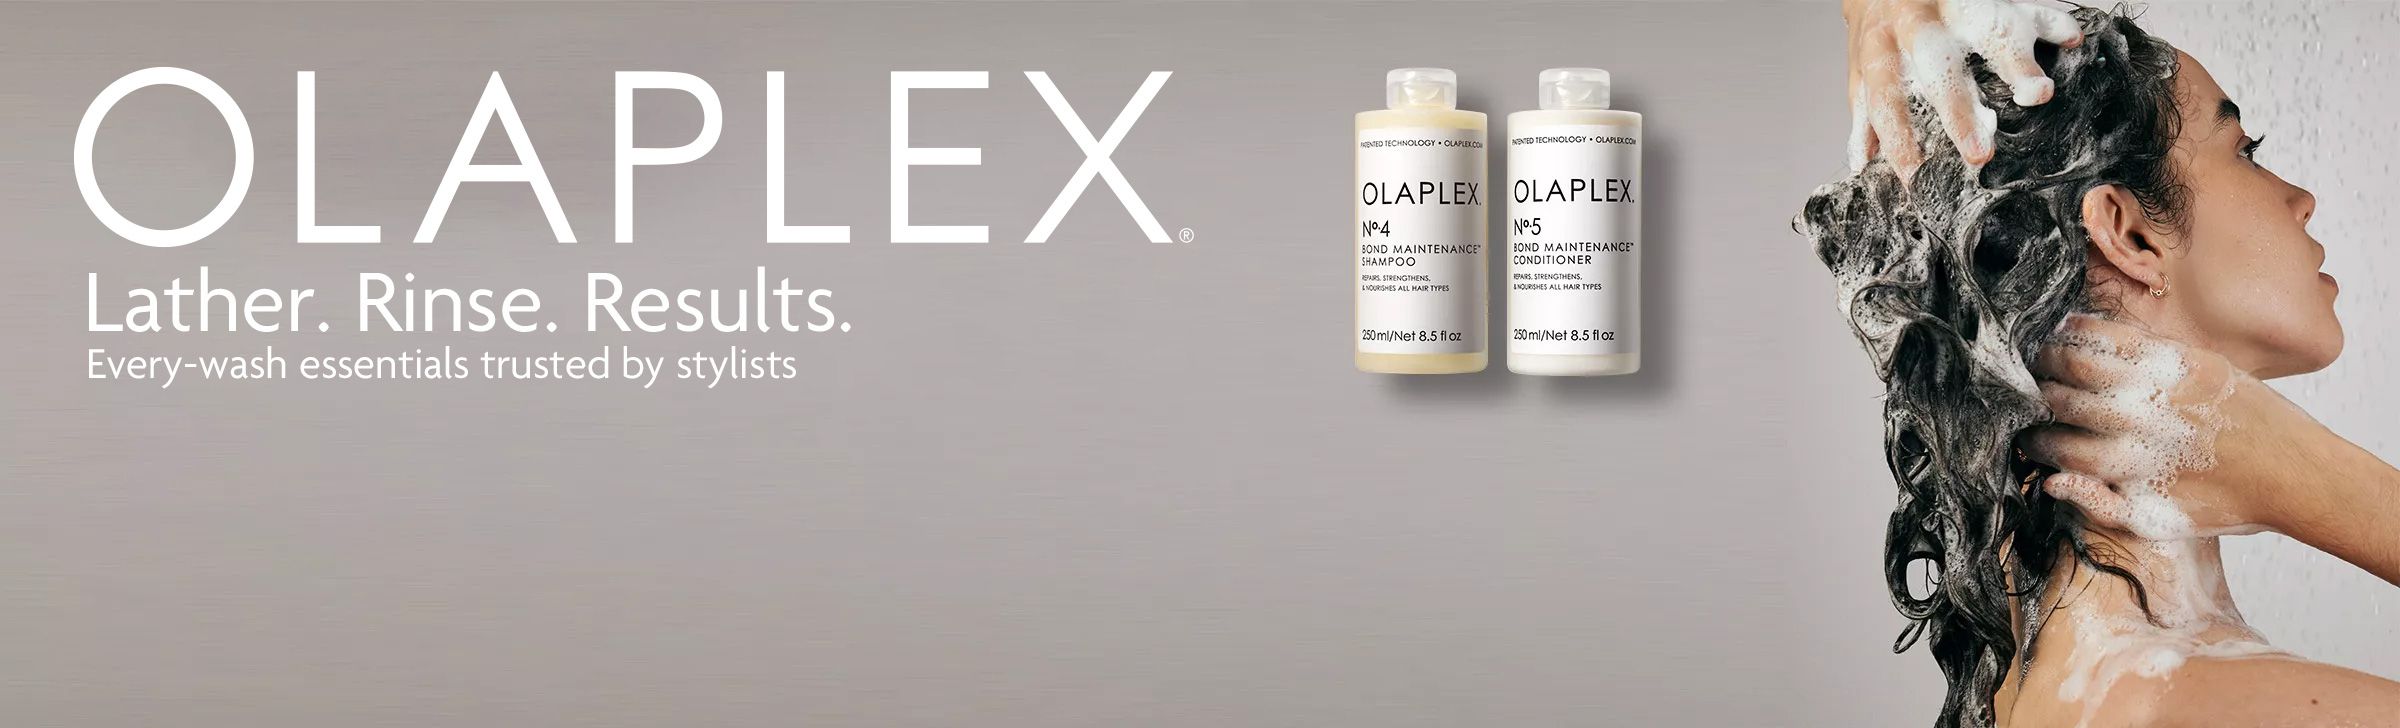 Olaplex products & lady washing her hair